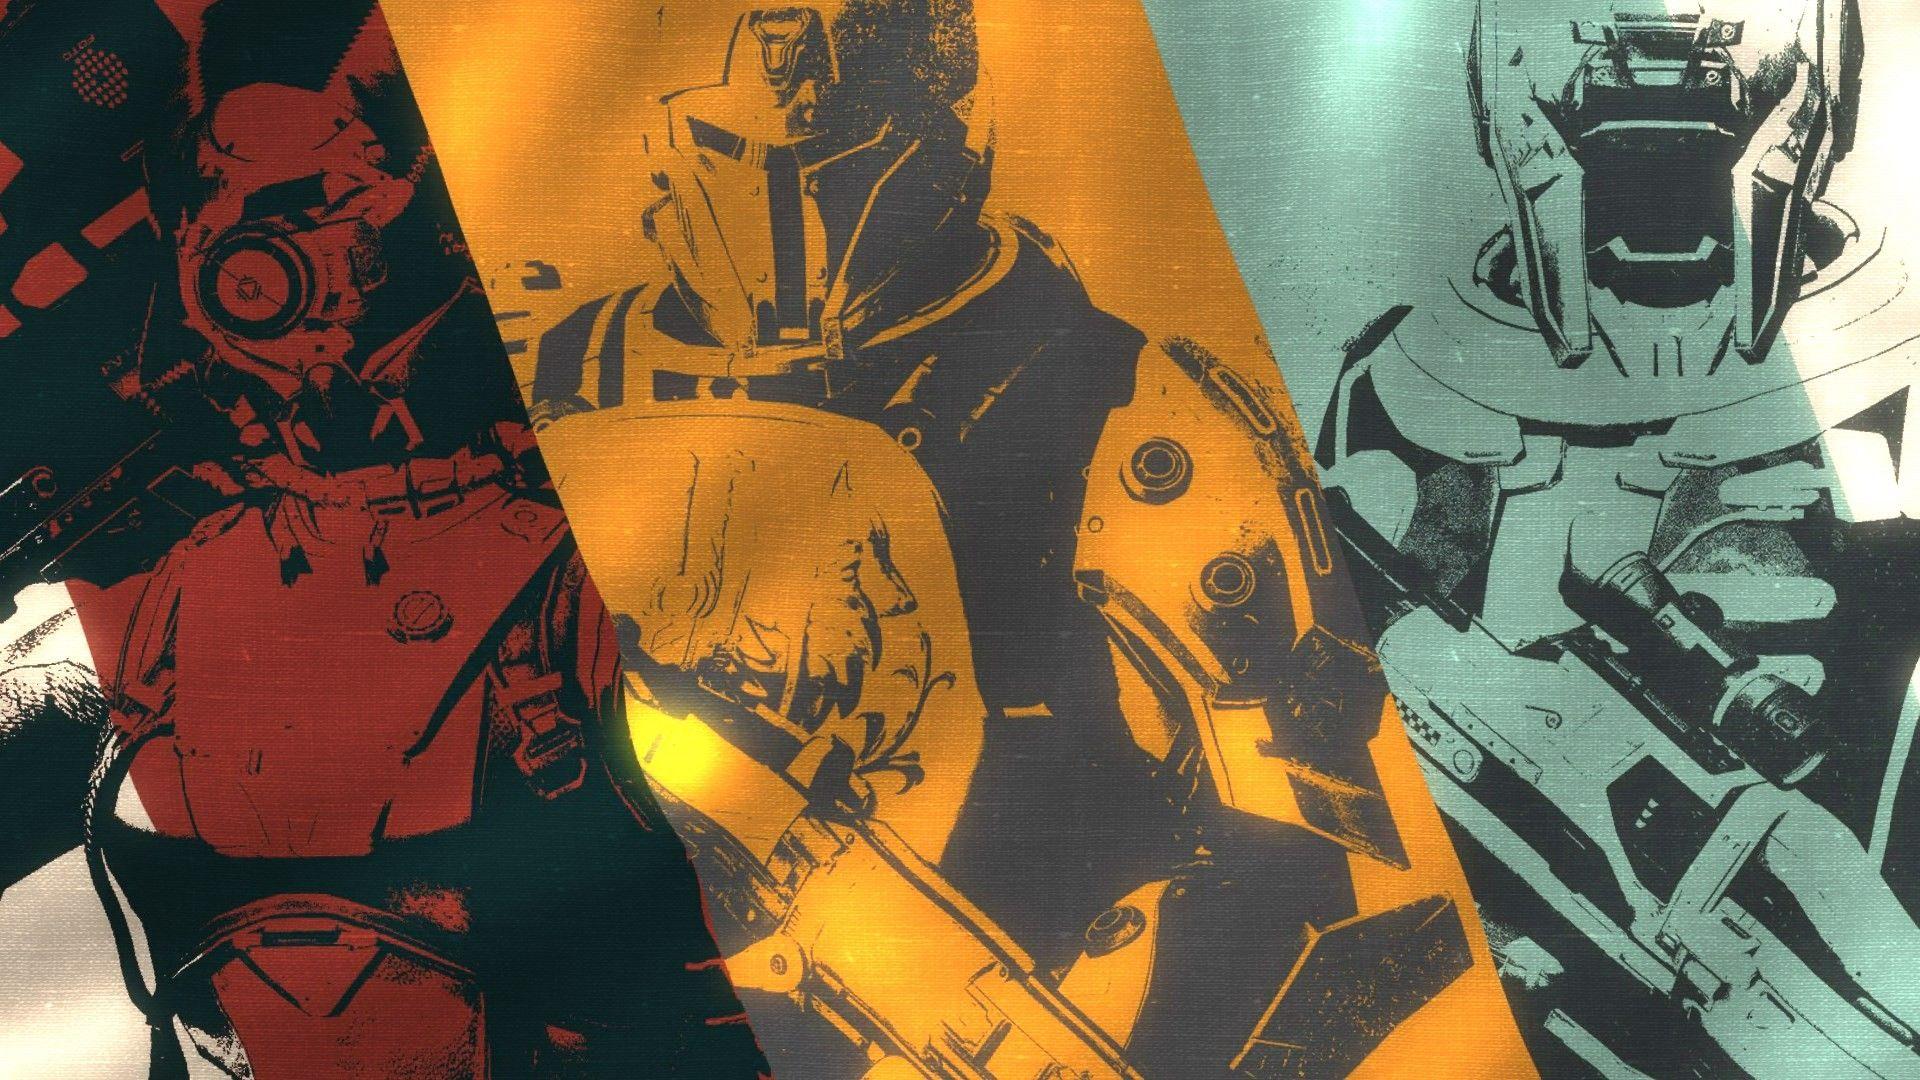 power armor gun futuristic armor destiny video game wallpaper